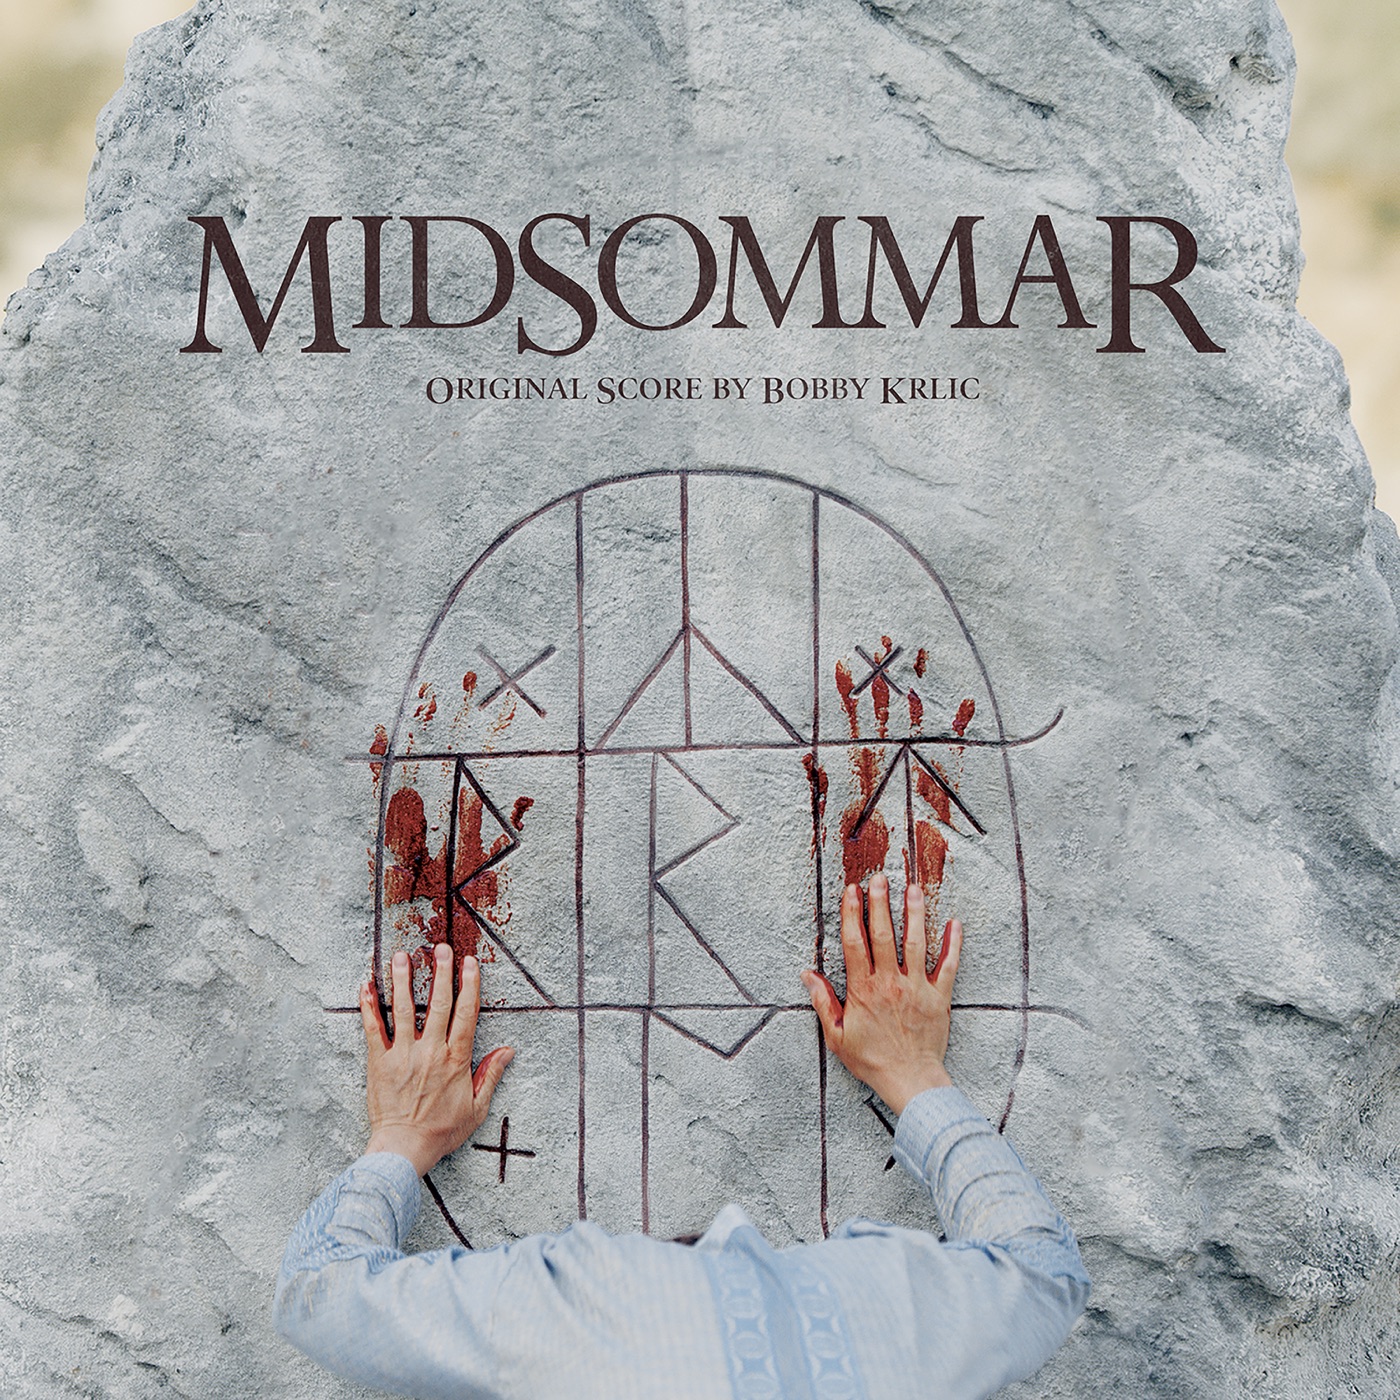 Midsommar (Original Motion Picture Score) by Bobby Krlic